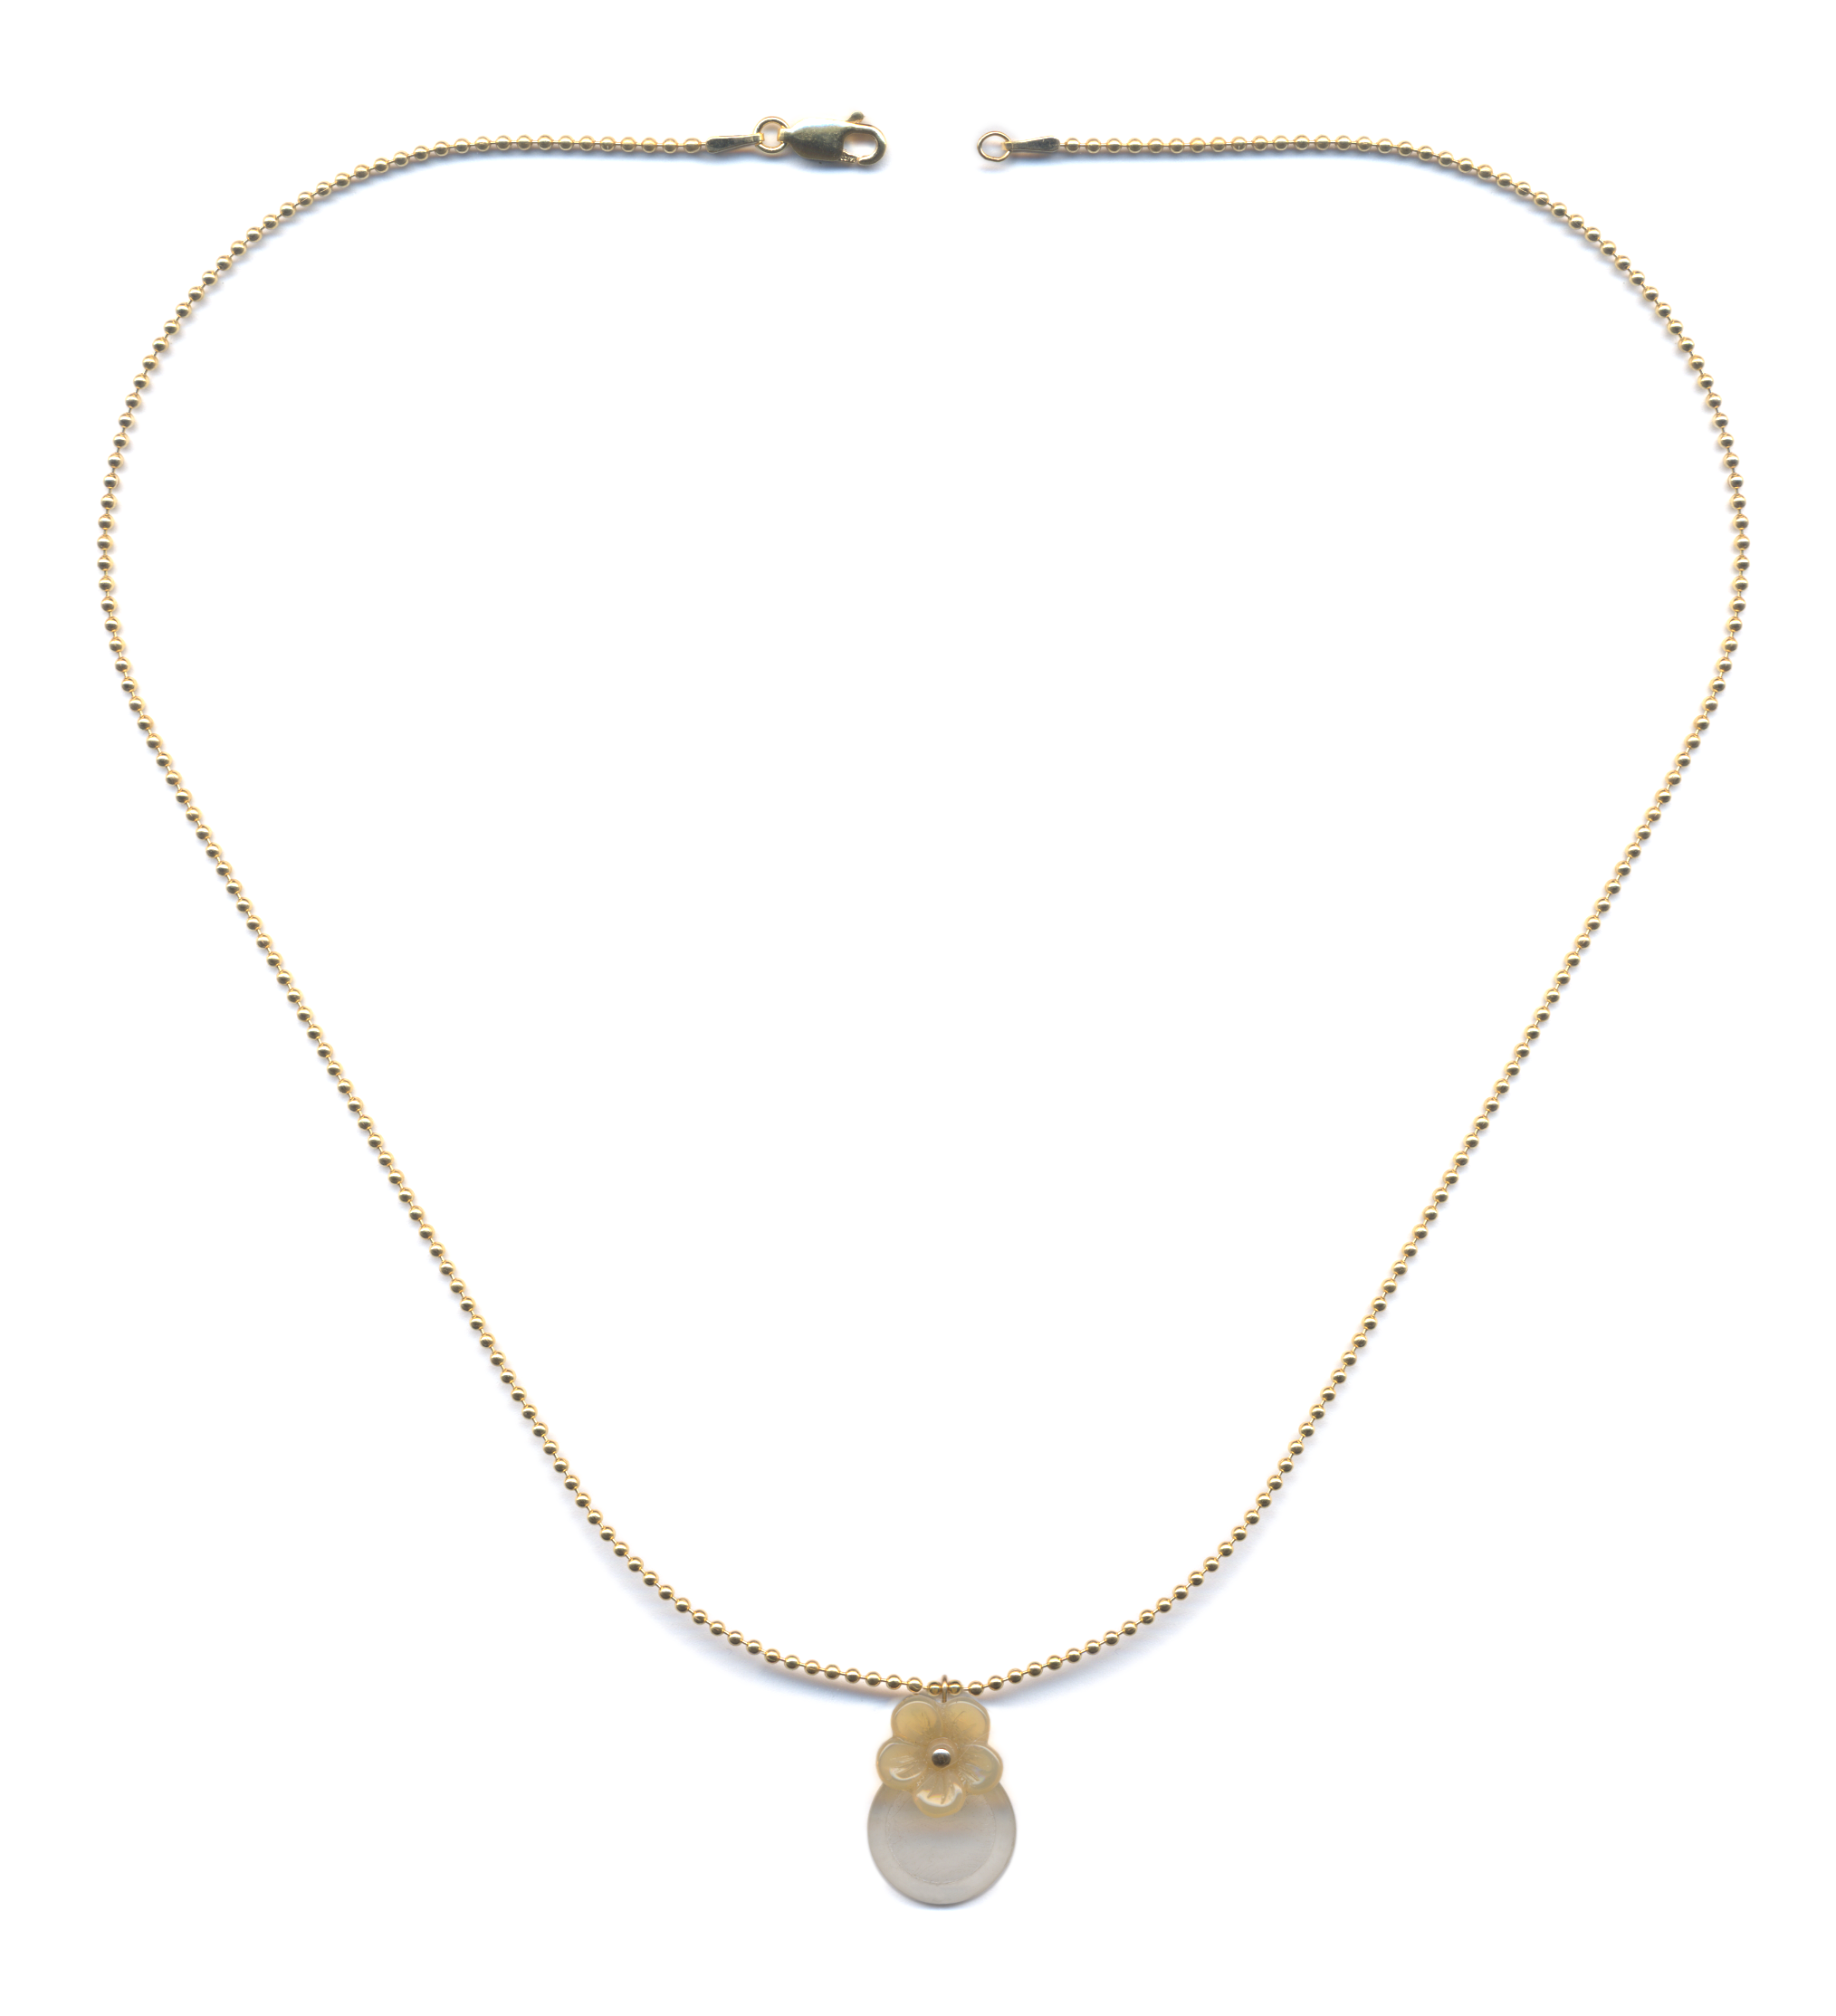 N2115 (Spring) Necklace